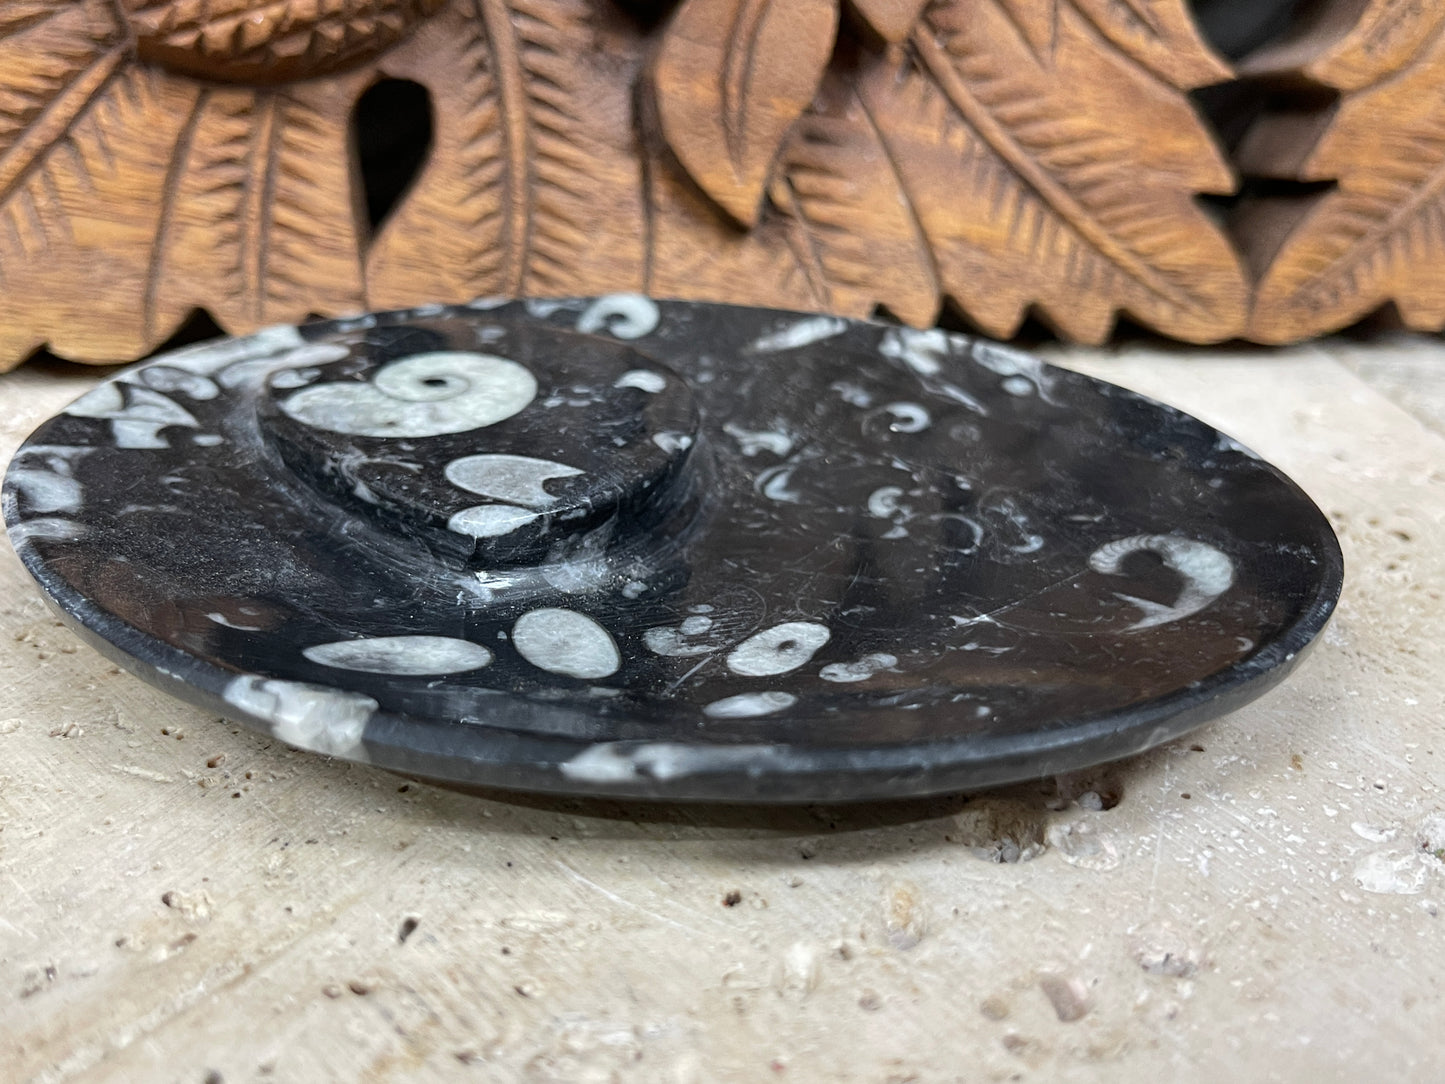 Ammonite fossil soap dish or jewelry dish